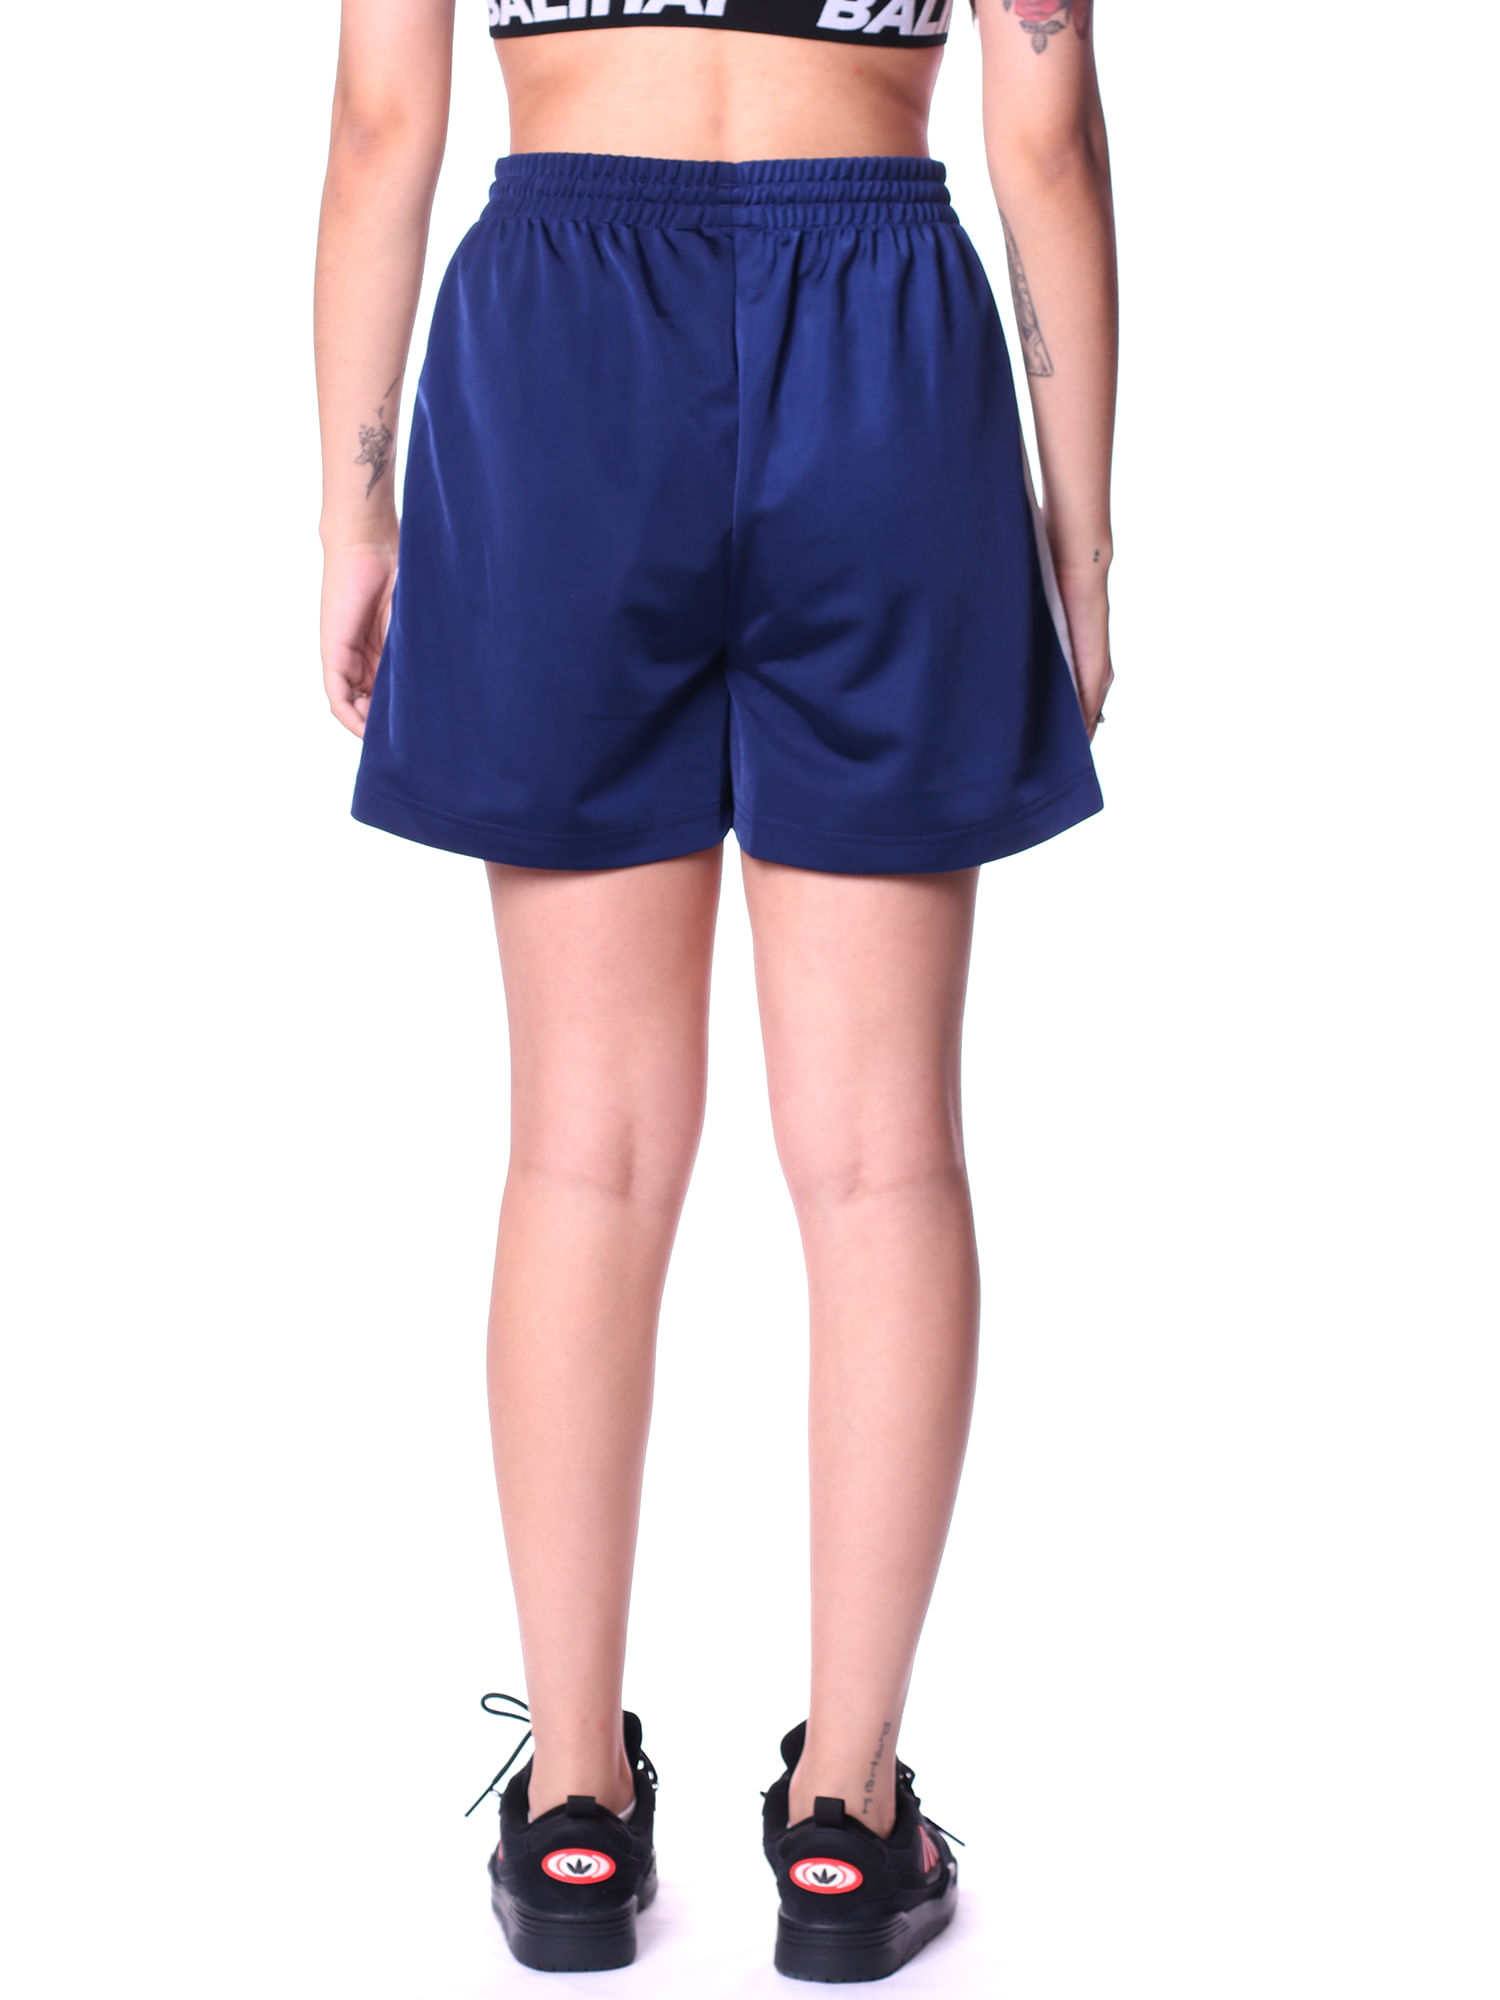 Shorts-adidas-firebird-Azul-marinho